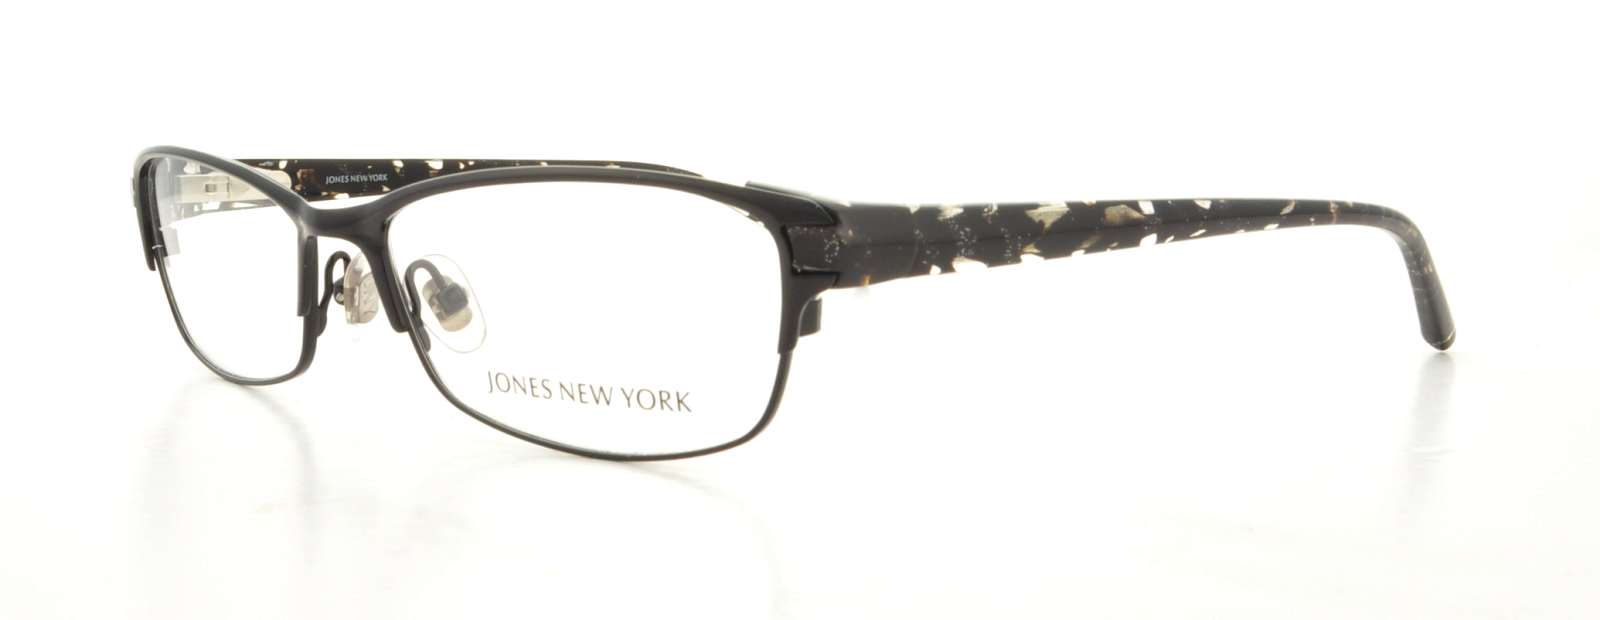 Picture of Jones New York Eyeglasses J463